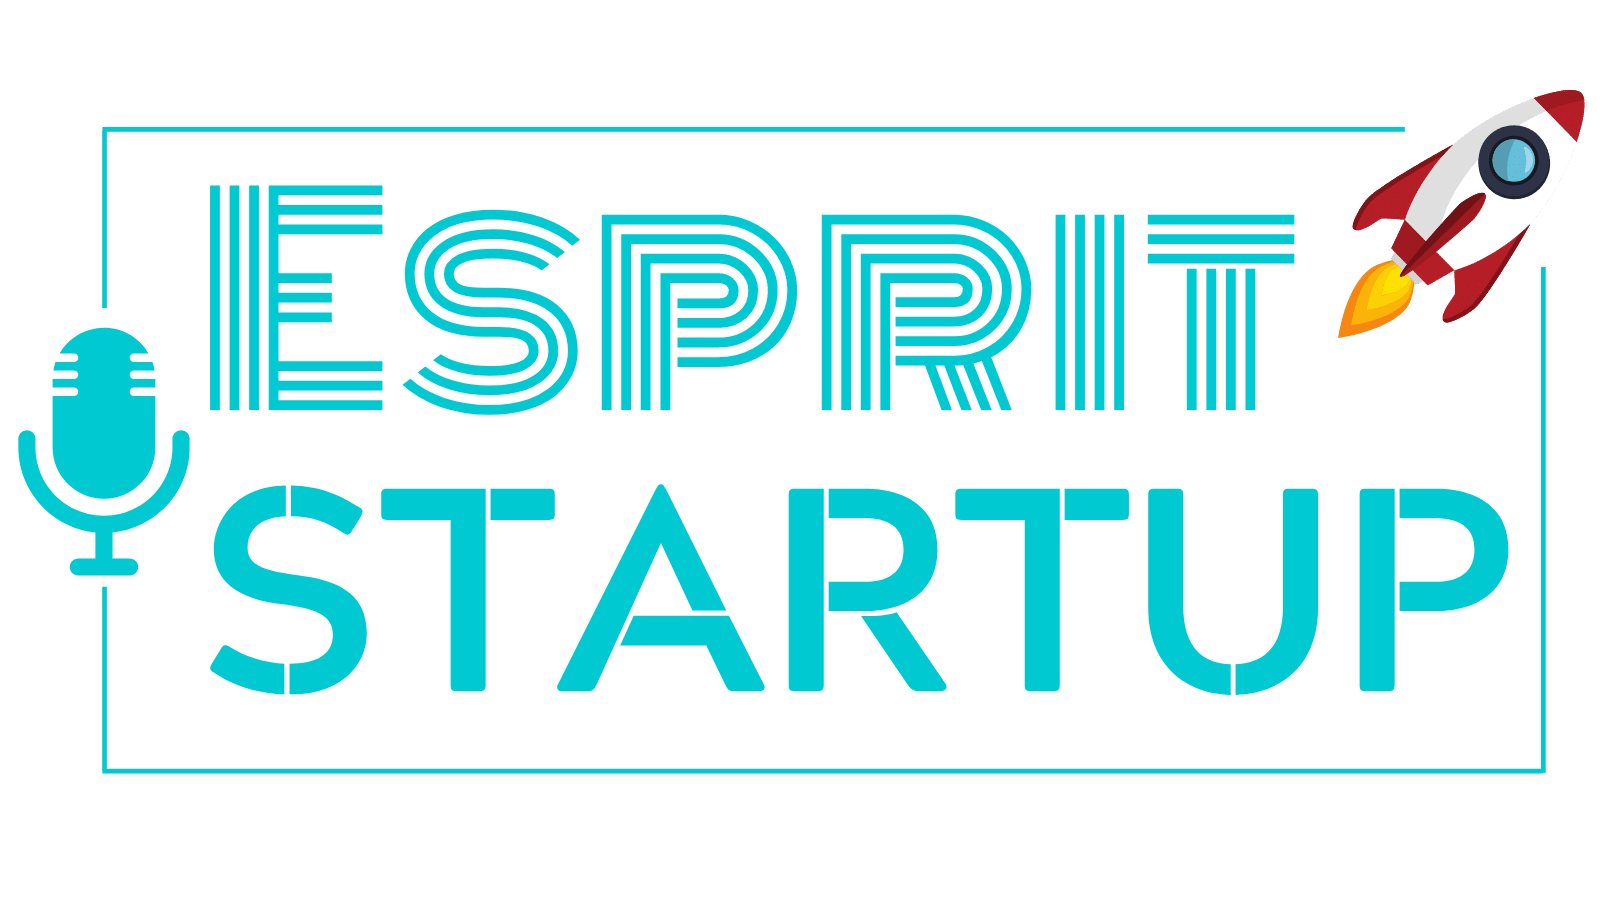 Podcast Esprit Startup